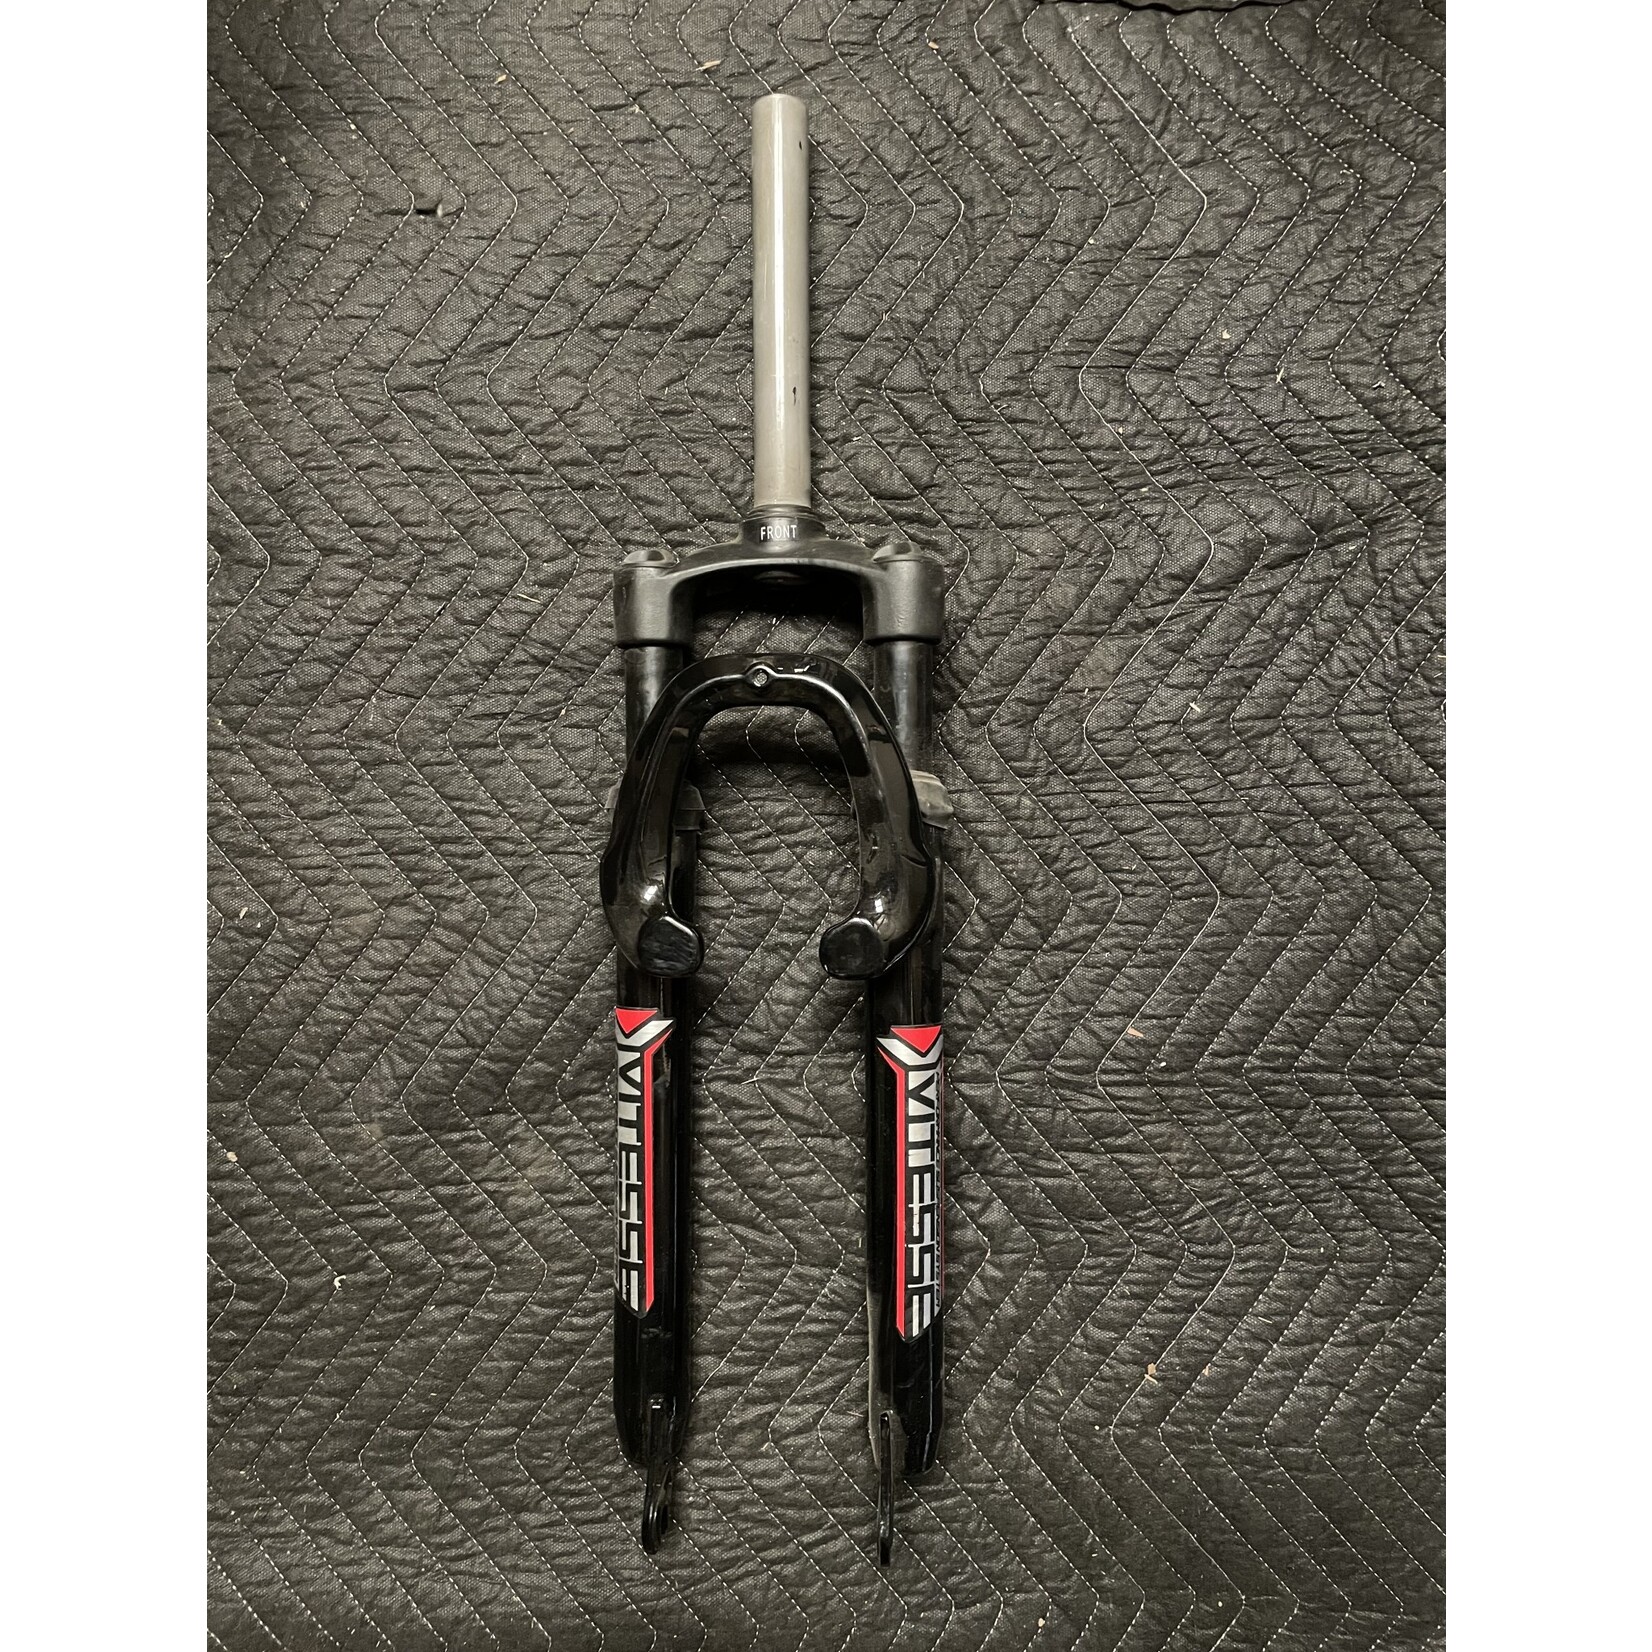 Vitesse 29” 1" Threadless Suspension Bicycle Fork 7 3/4” Steer Tube (Black & Red)